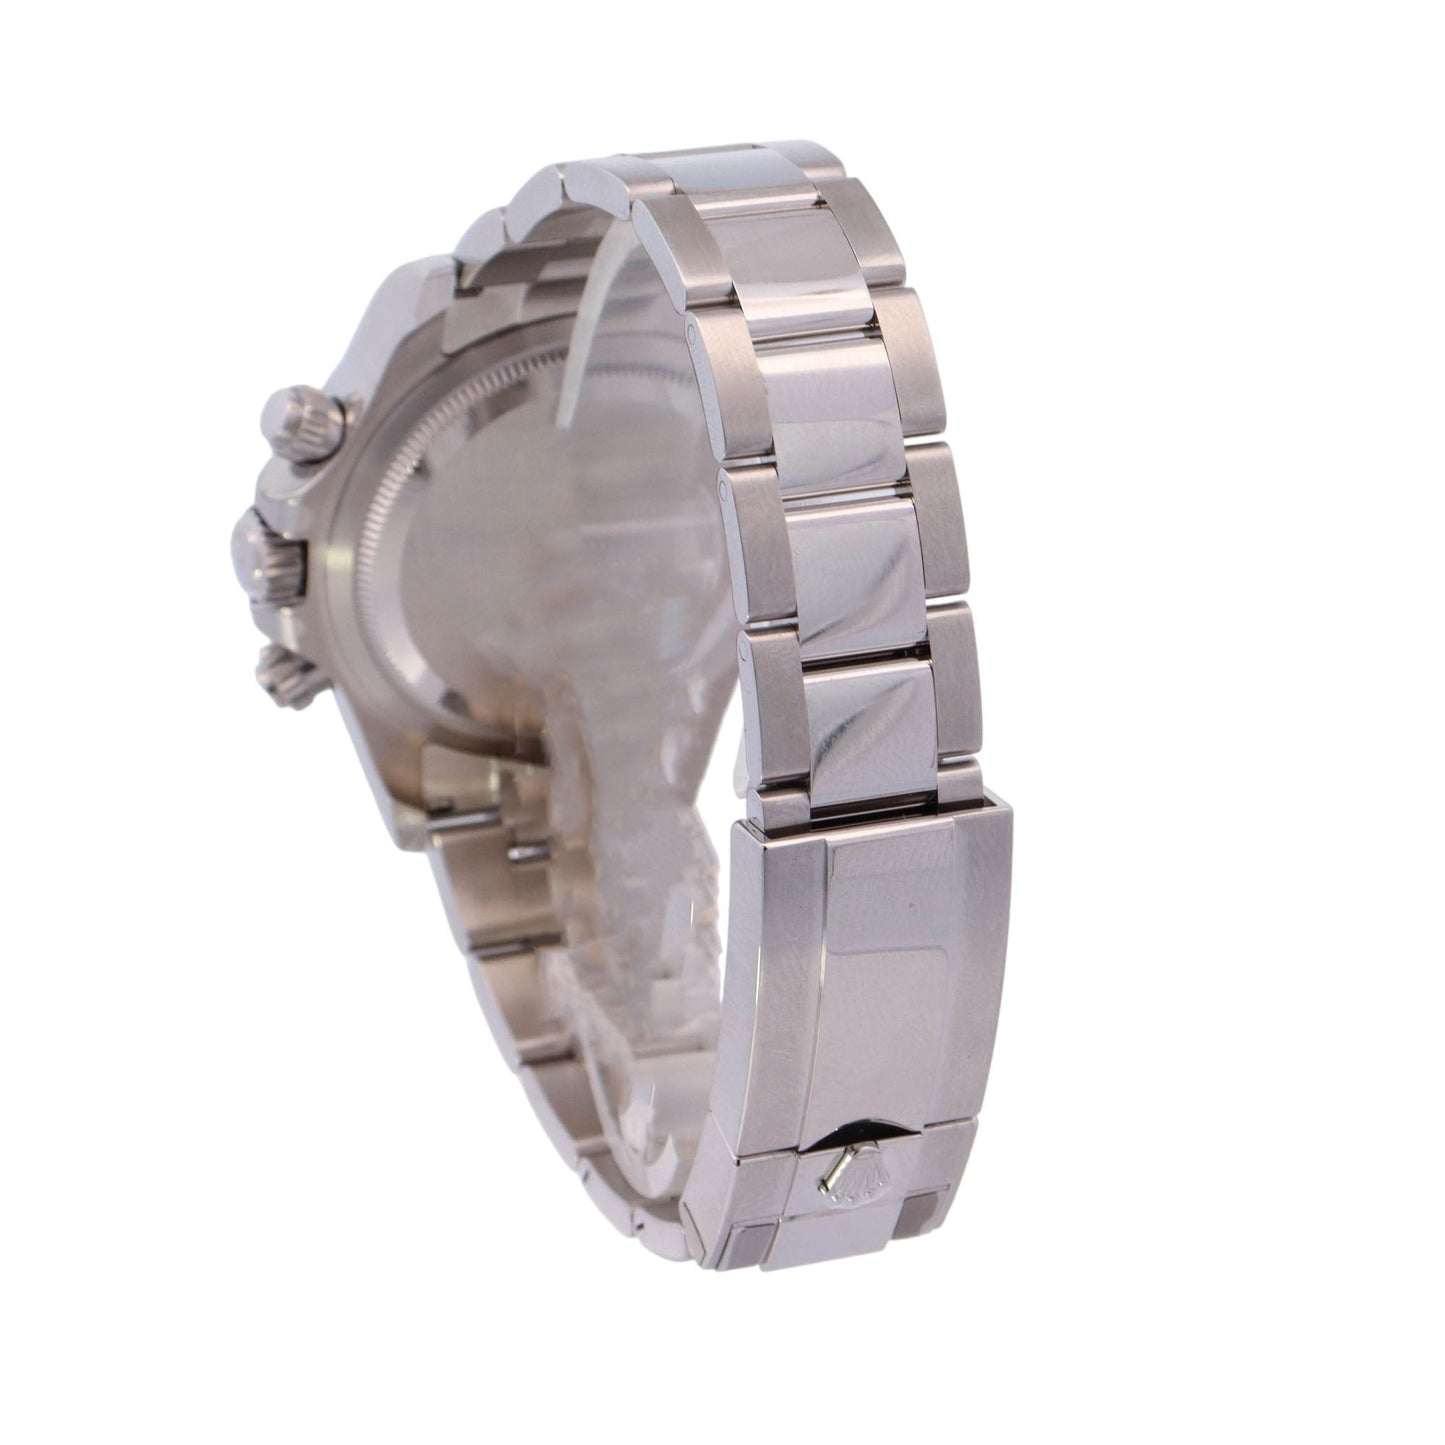 Rolex Daytona "Panda" Stainless Steel 40mm White Chronograph Dial Watch Reference #: 126500LN - Happy Jewelers Fine Jewelry Lifetime Warranty